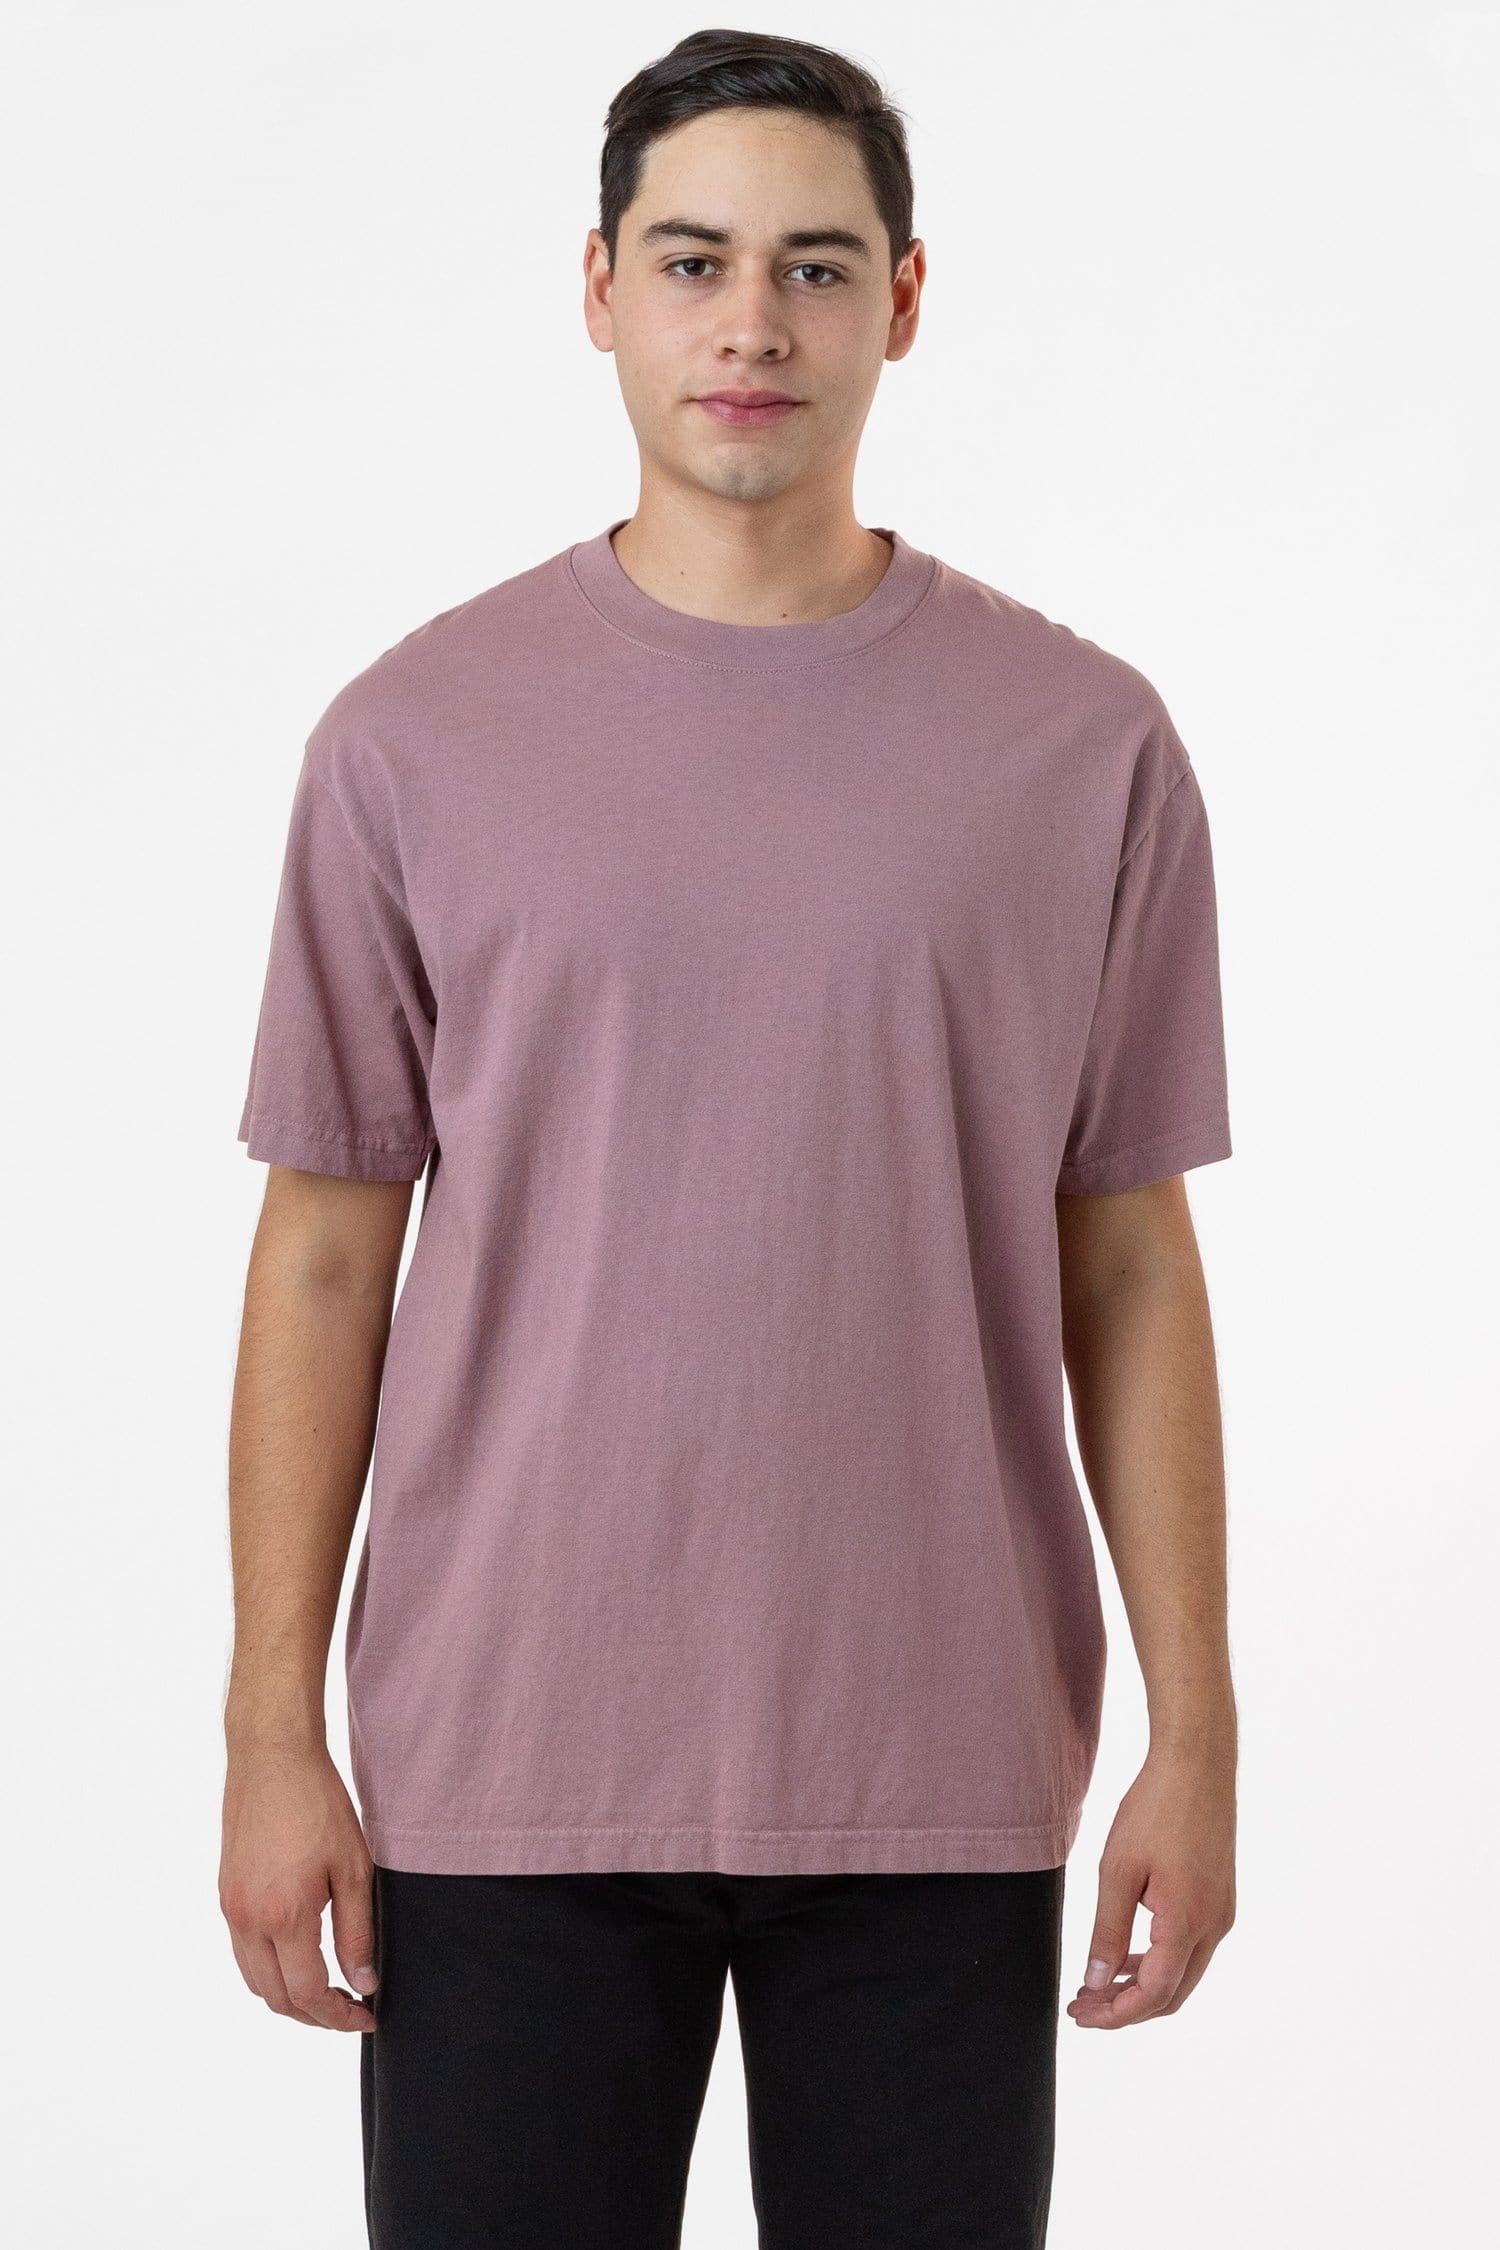 Los Angeles Apparel S/S T-shirts 1801GD Garment Dye Crew Neck 6.5oz Dark Silver